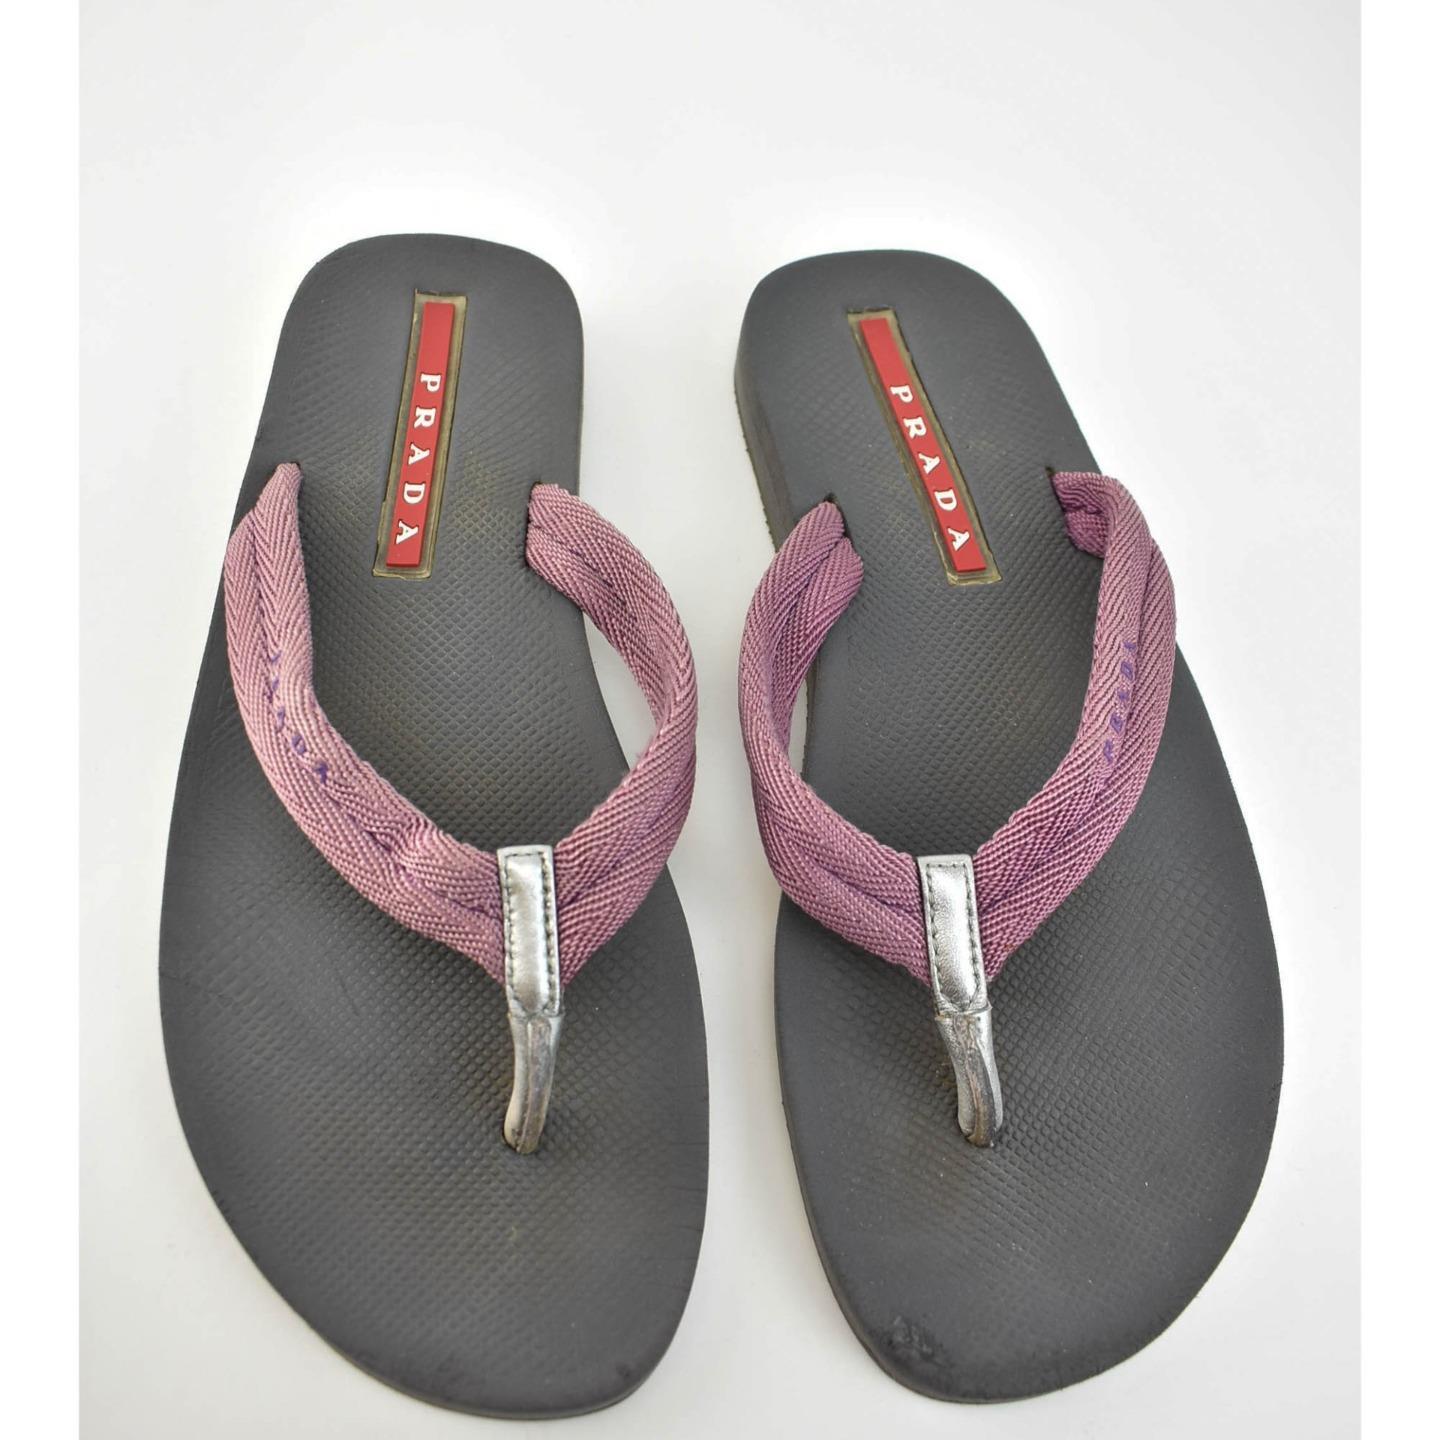 PRADA: Pink, Woven Logo Sandals/Flip Flops Sz: 7.5M | eBay